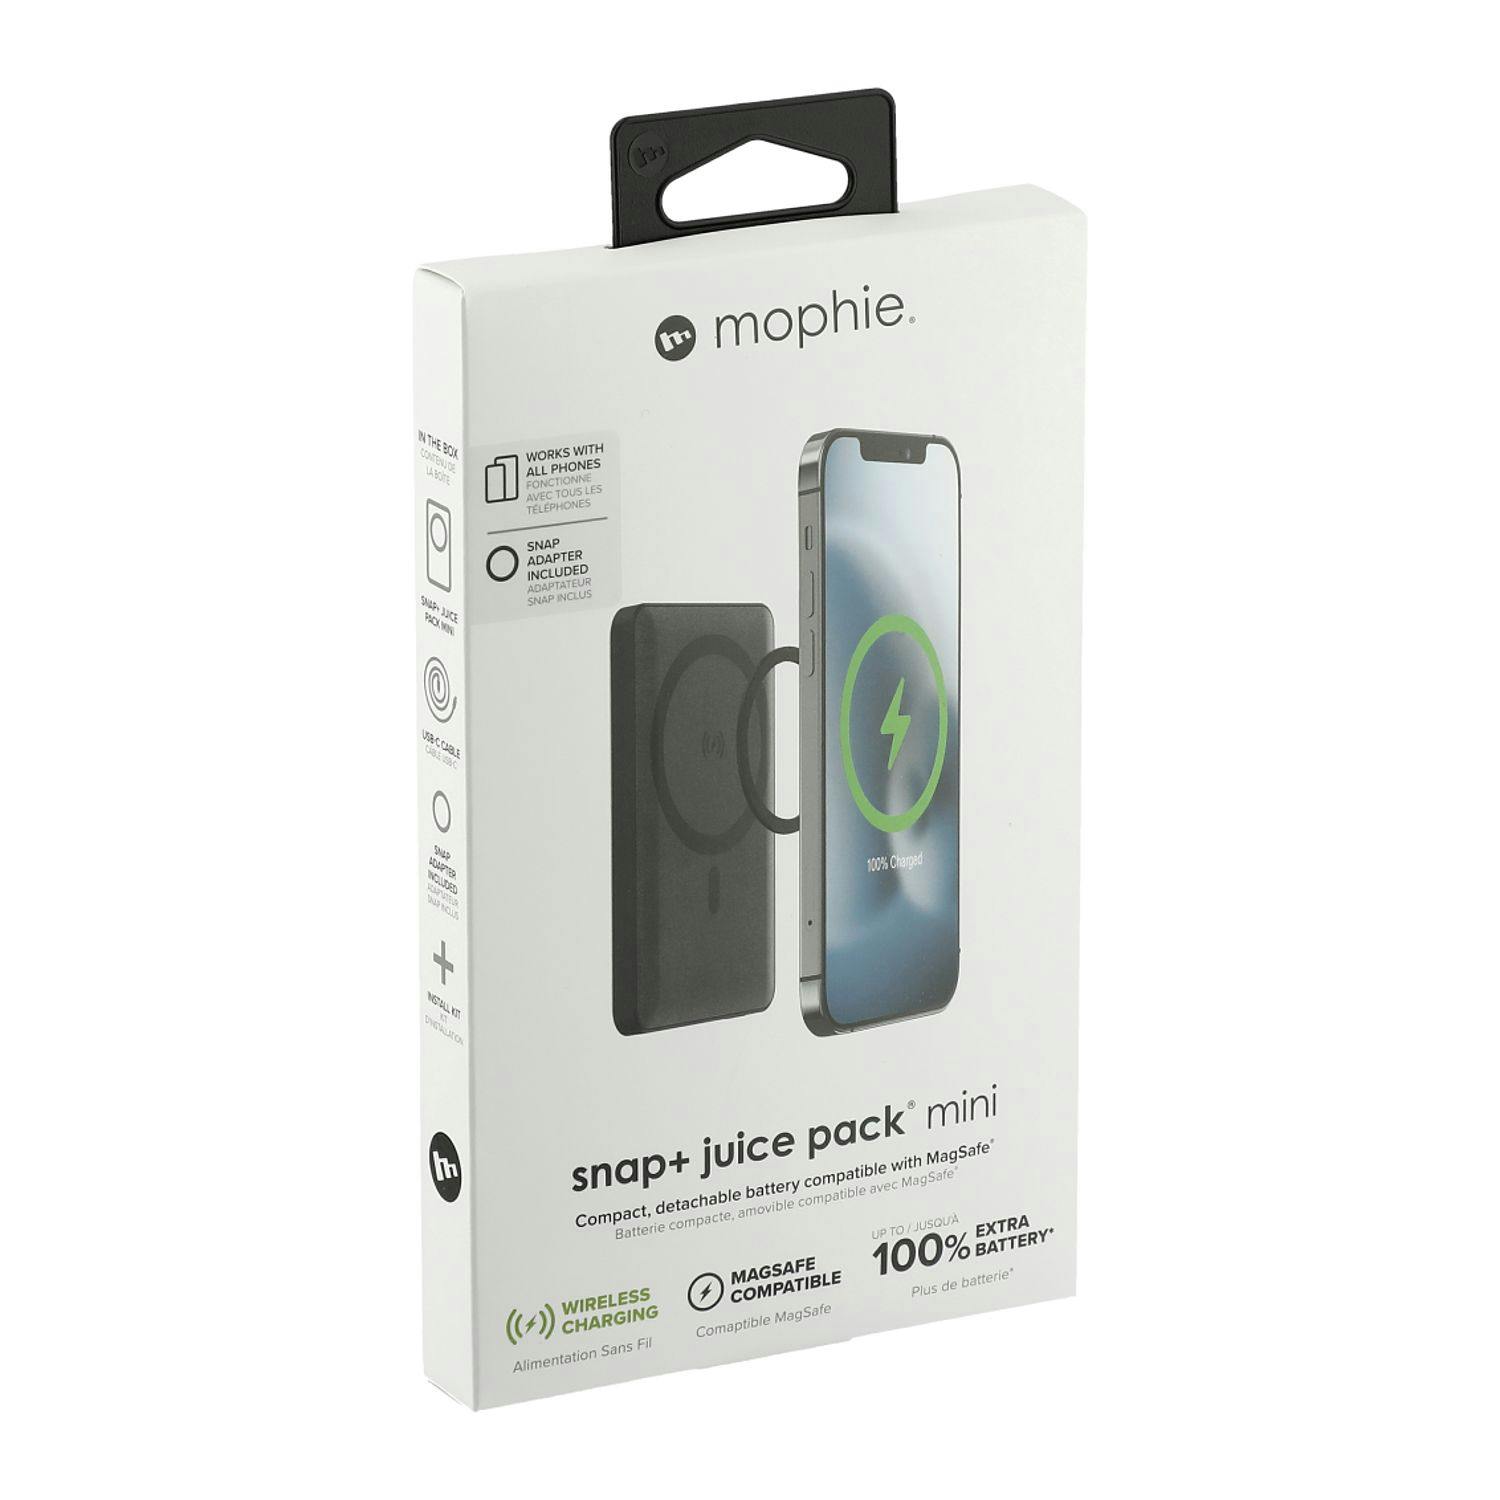 mophie® Snap+ Mini 5000 mAh Wireless Power Bank - additional Image 4